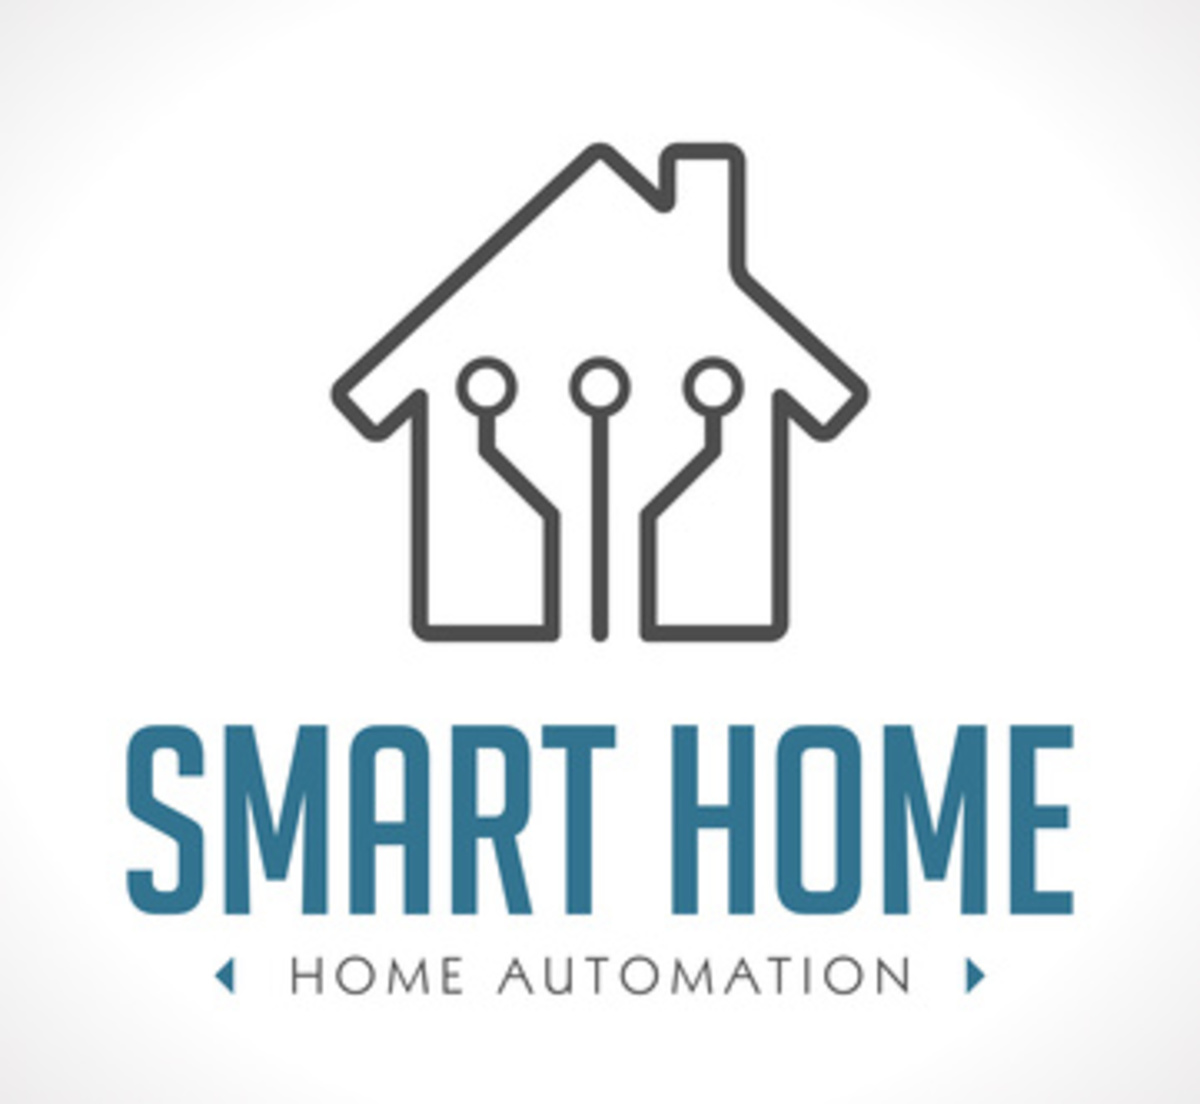 【OSS】ホームオートメーションプラットフォーム9選---家をスマートにするために活用できるオープンソース自動化ツール